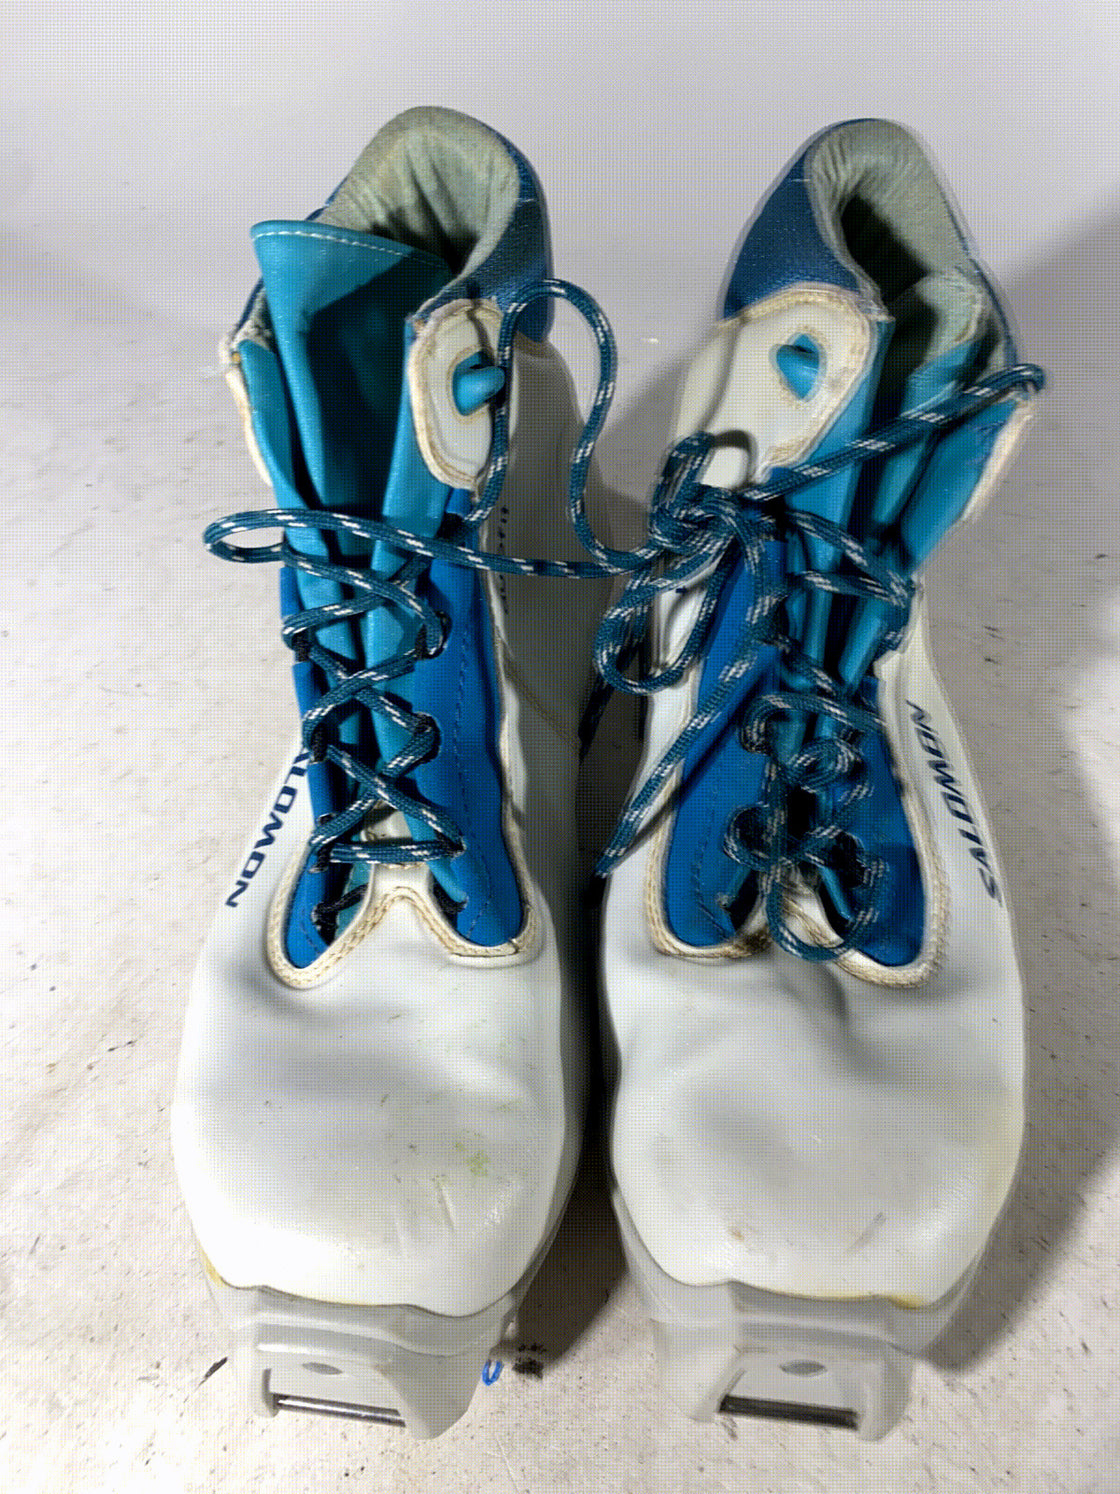 SALOMON Classic Nordic Cross Country Ski Boots Size EU39 US7.5 SNS Profil